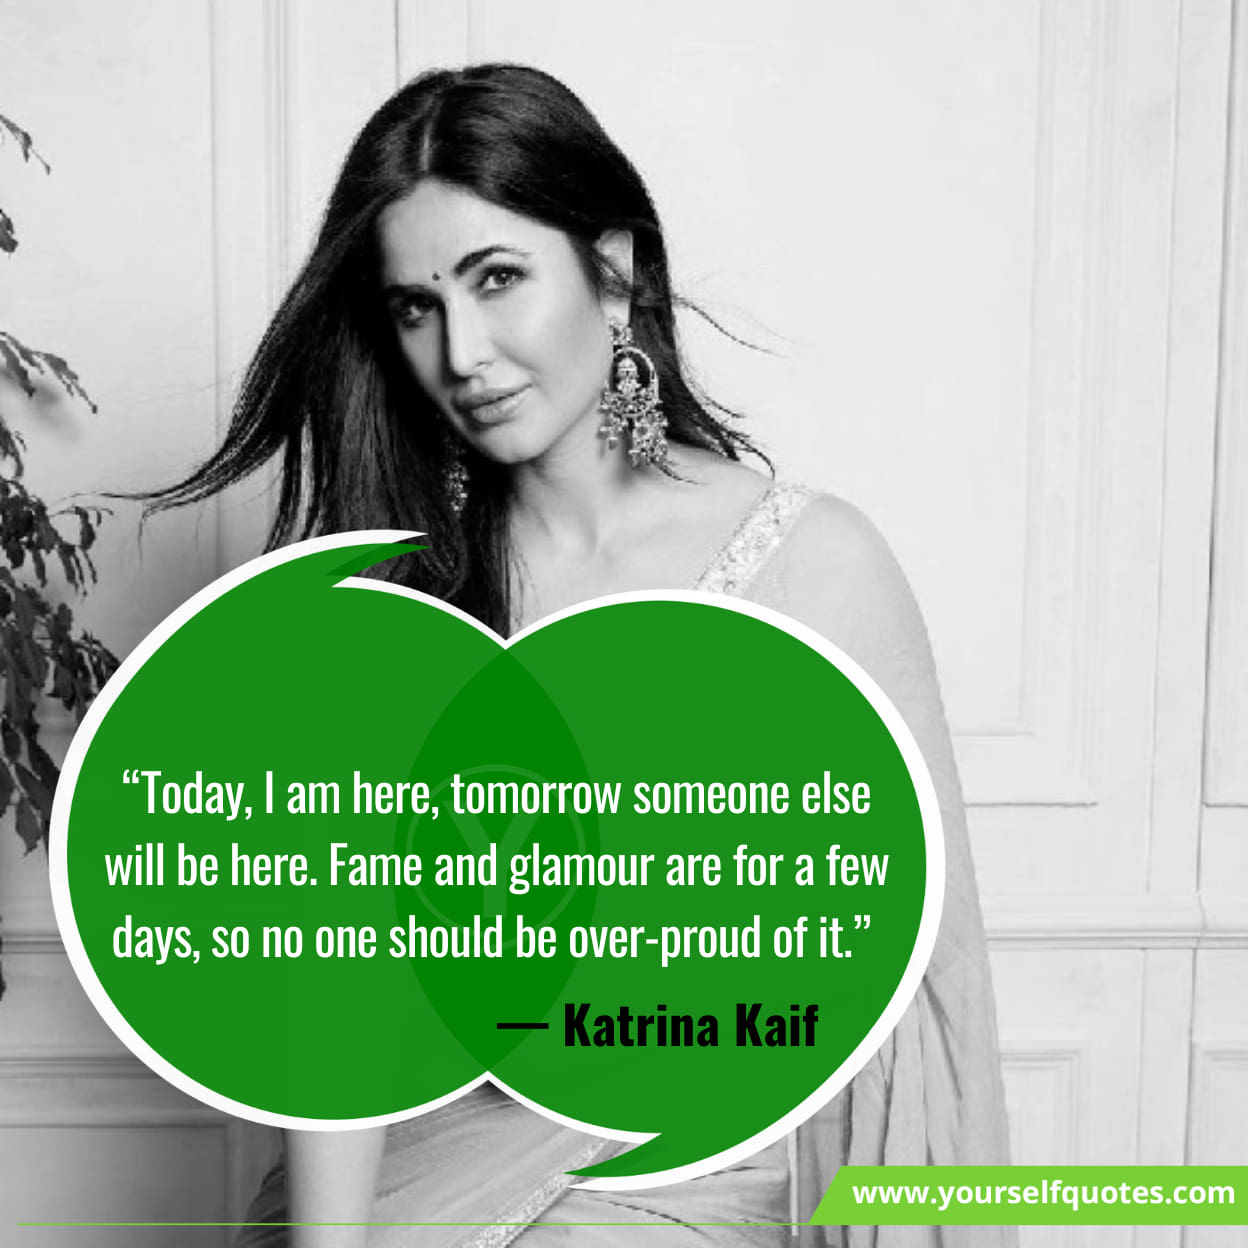 Katrina Kaif Quotes For Success In Life